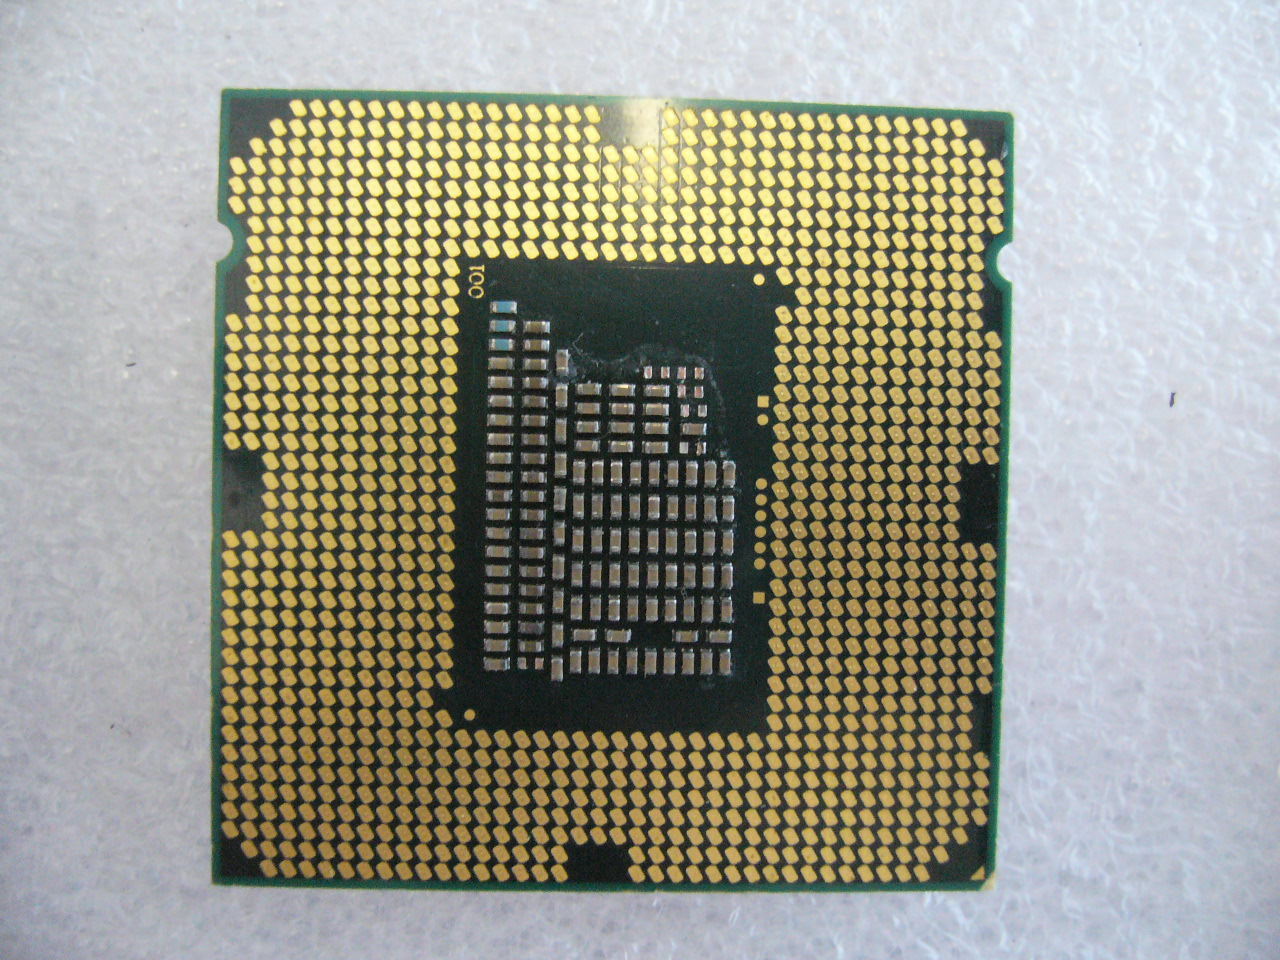 QTY 1x INTEL CPU i3-2120 3.3GHZ/3MB LGA1155 SR05Y NOT WORKING - Click Image to Close